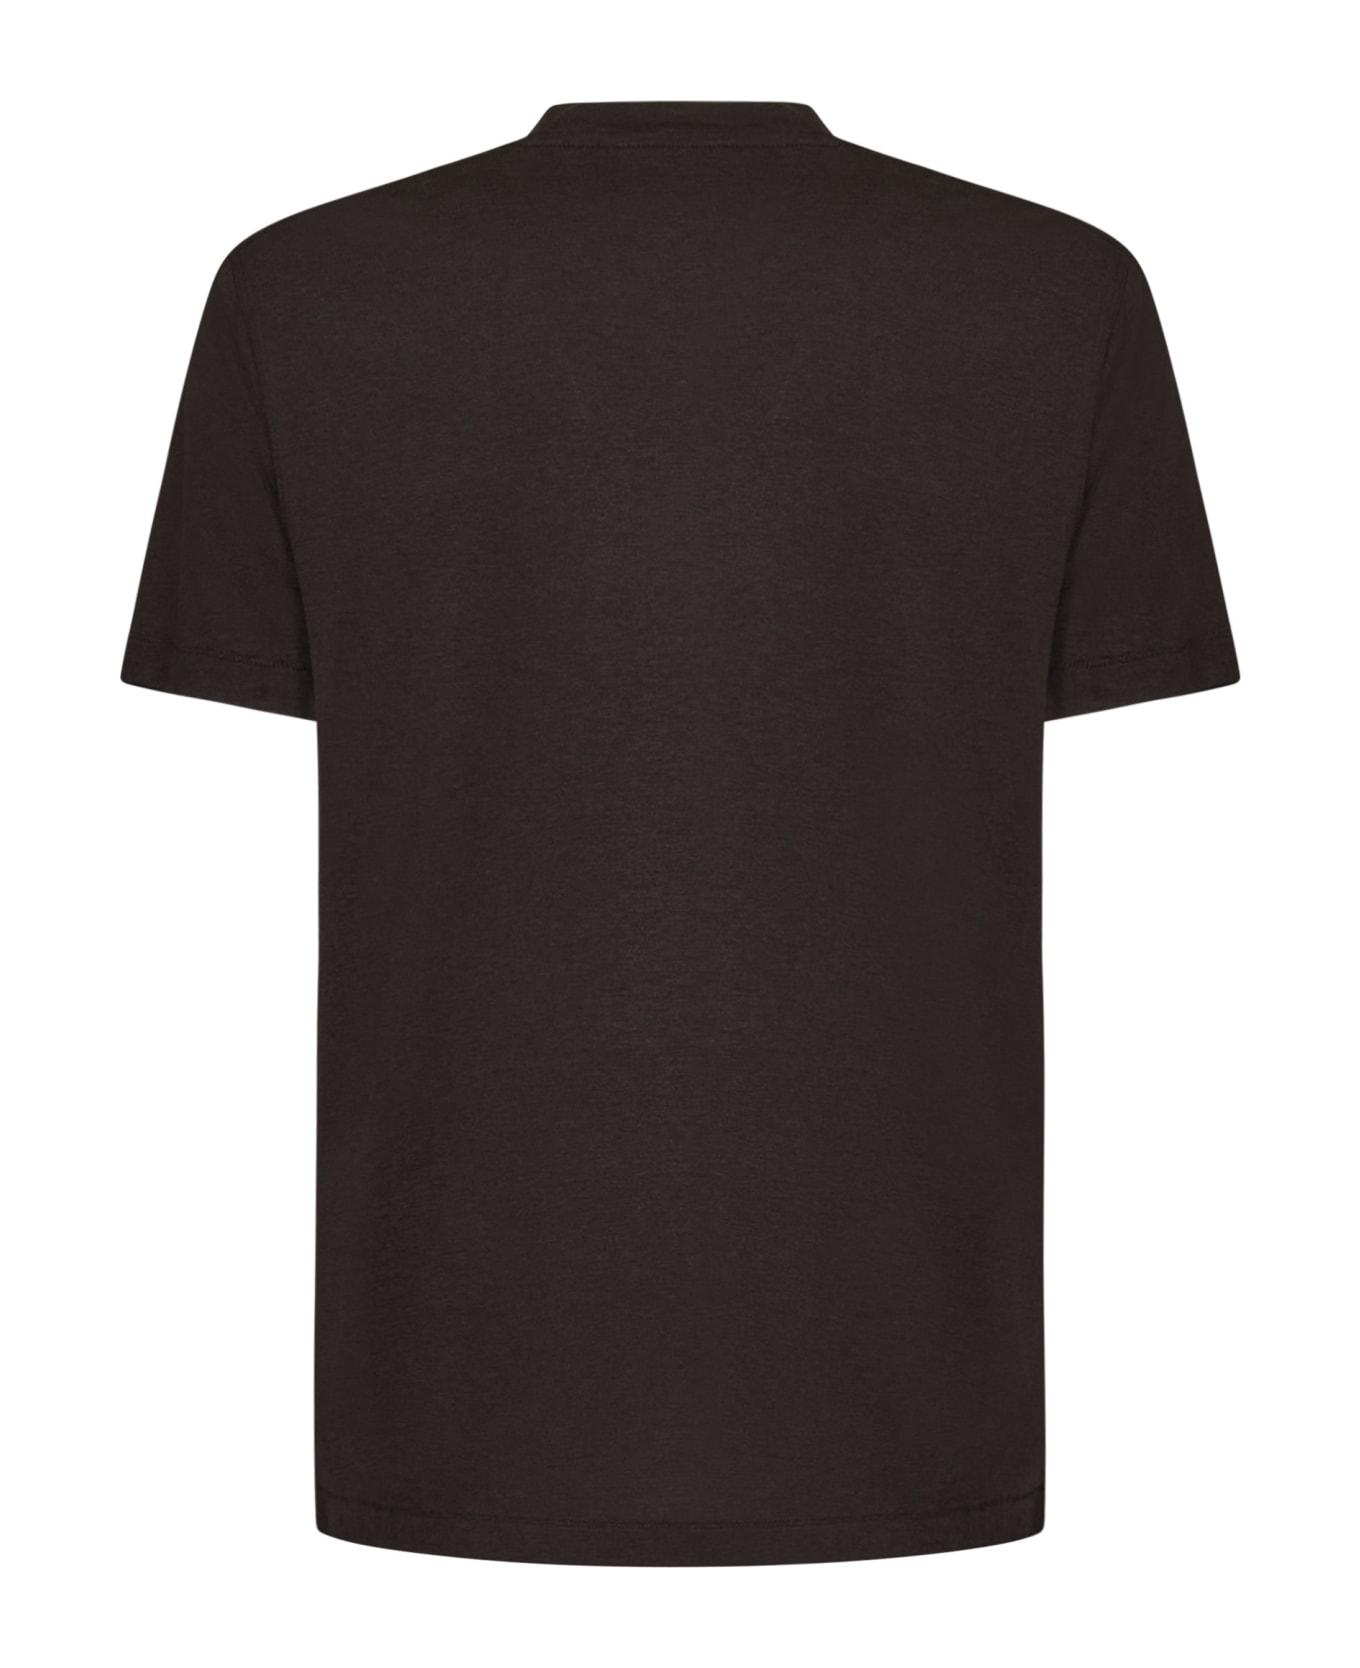 Tom Ford T-shirt - DARK CHOCOLATE シャツ